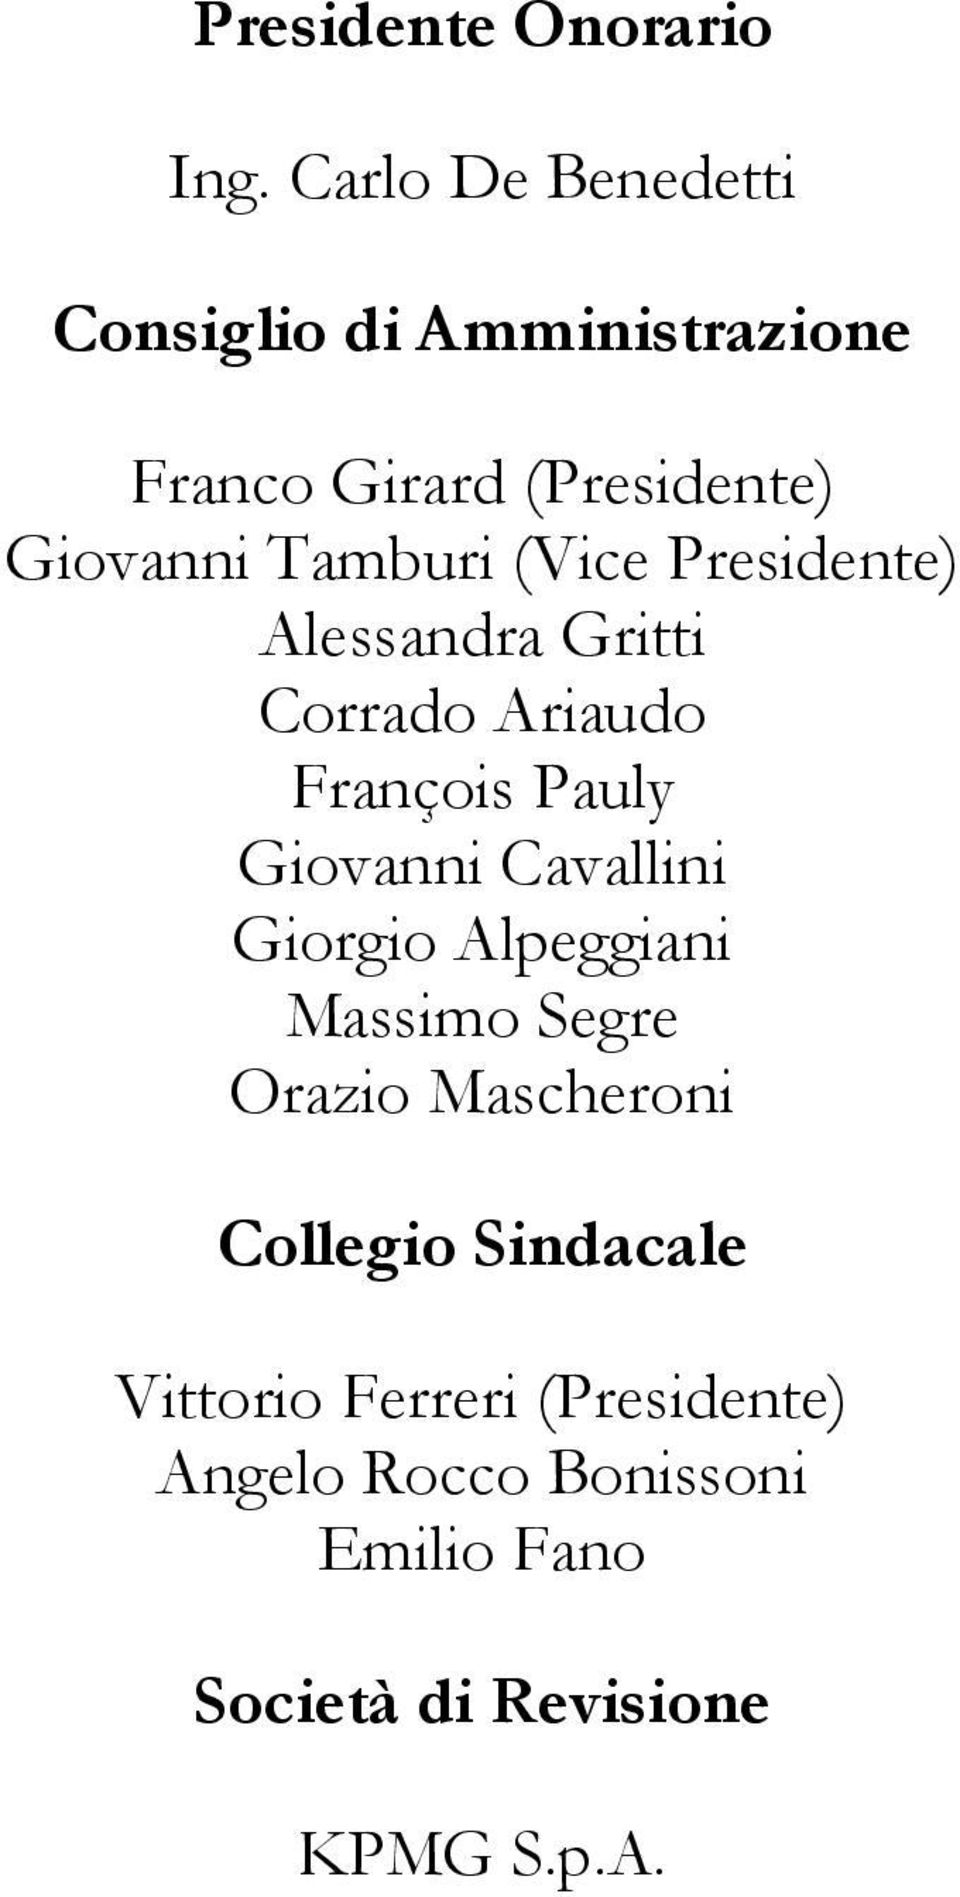 (Vice Presidente) Alessandra Gritti Corrado Ariaudo François Pauly Giovanni Cavallini